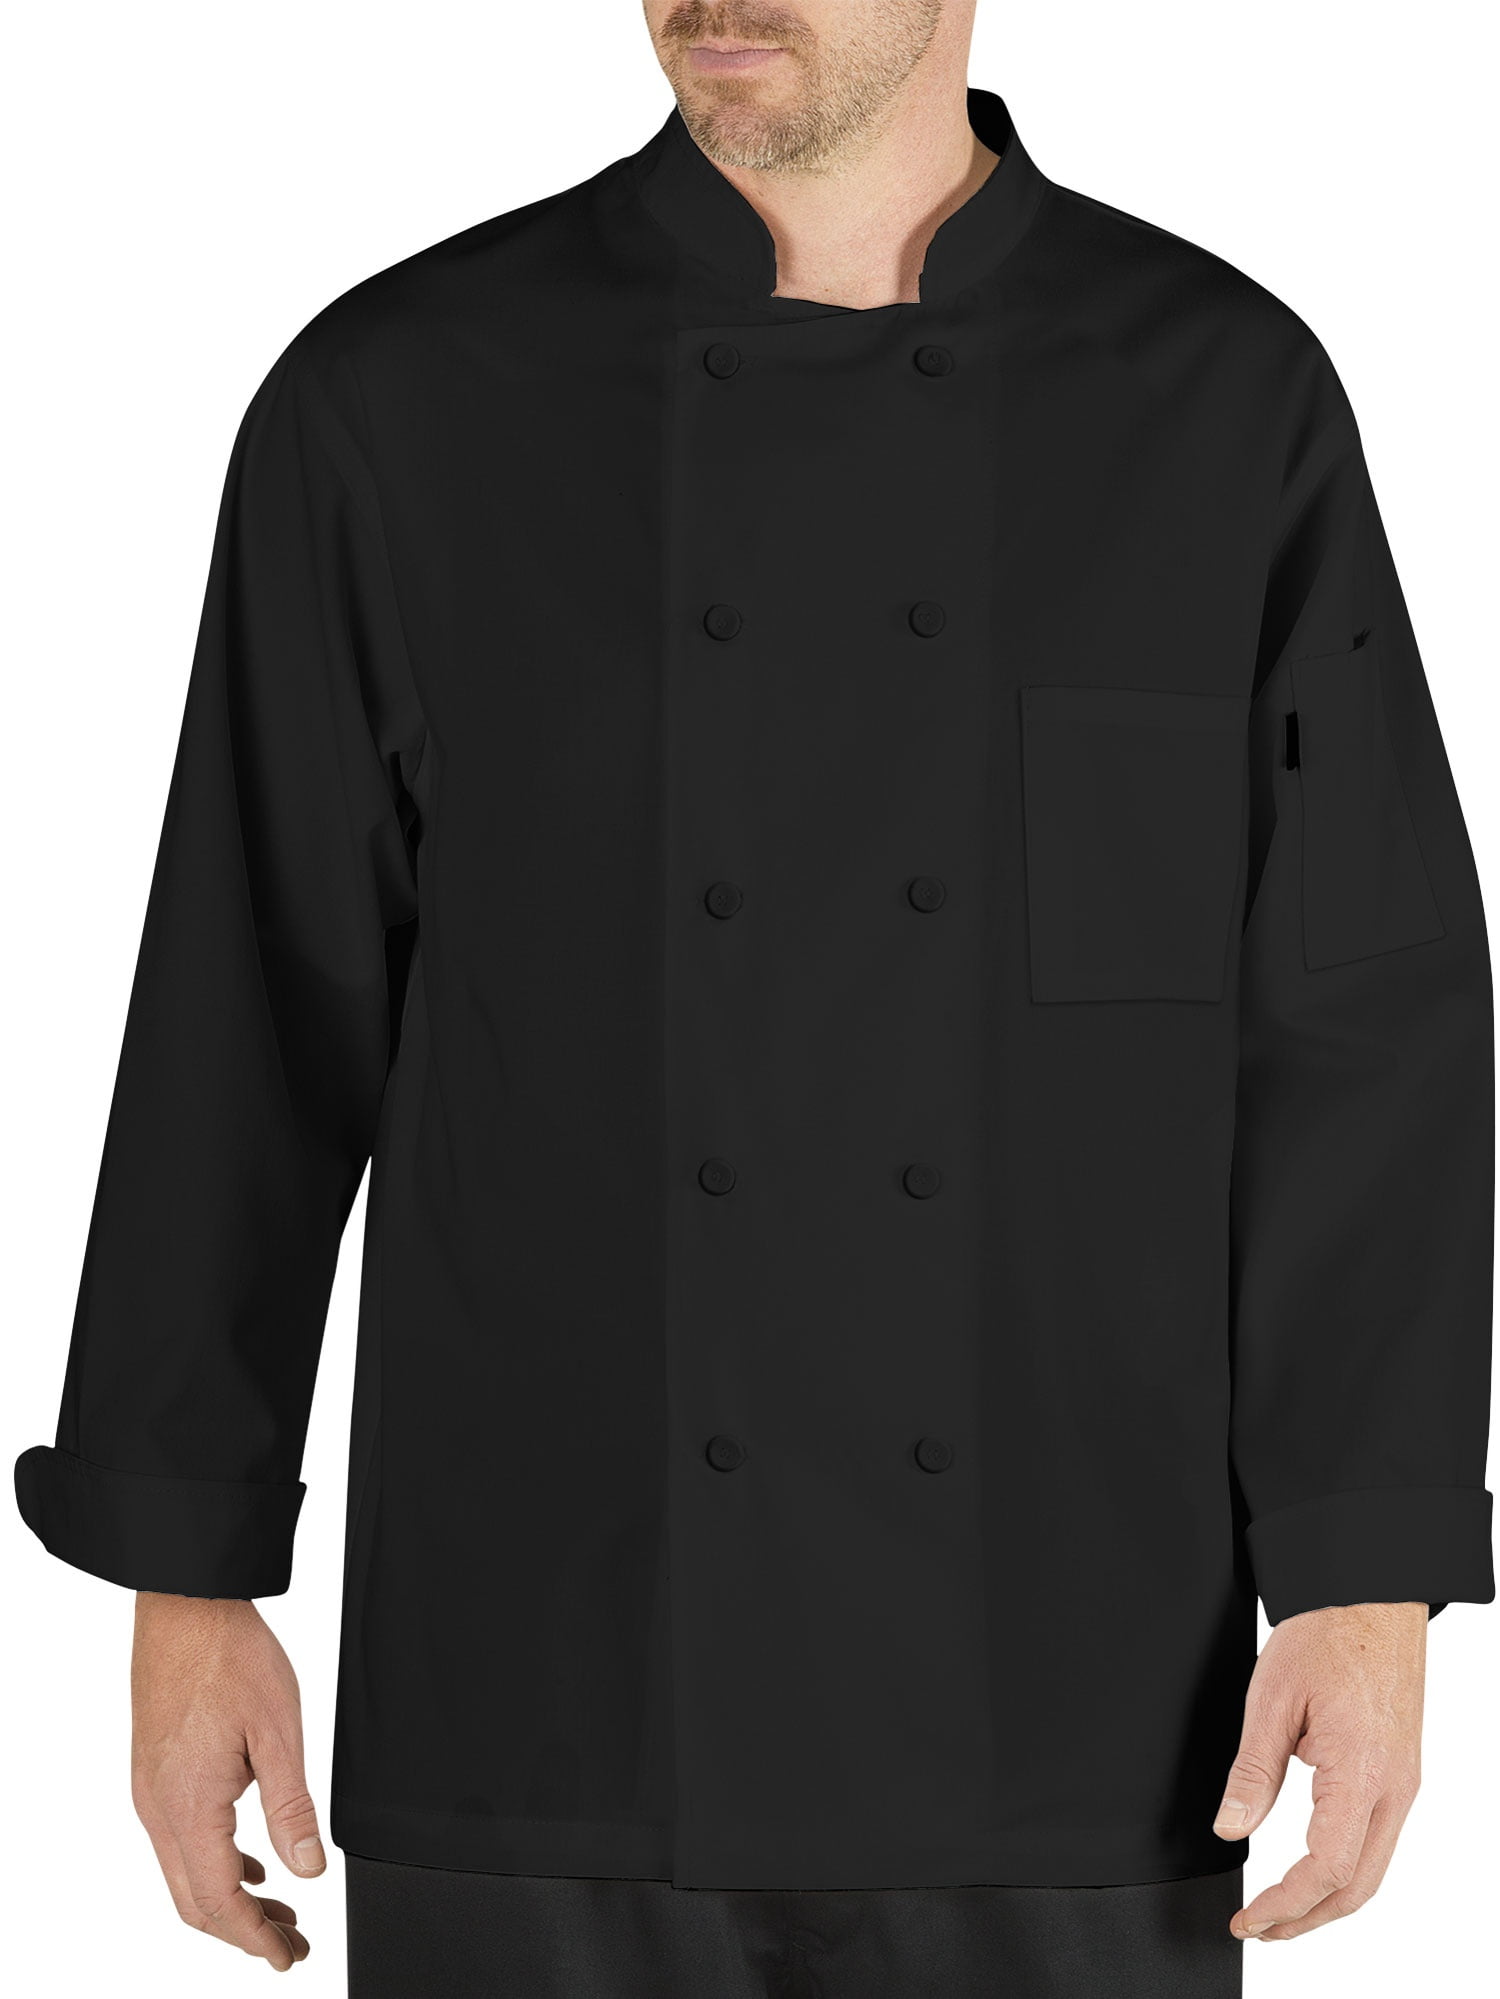 Chefwear 4025-30 Five-Star Lightweight 3/4 Sleeve Chef Jacket Black XS-5XL 